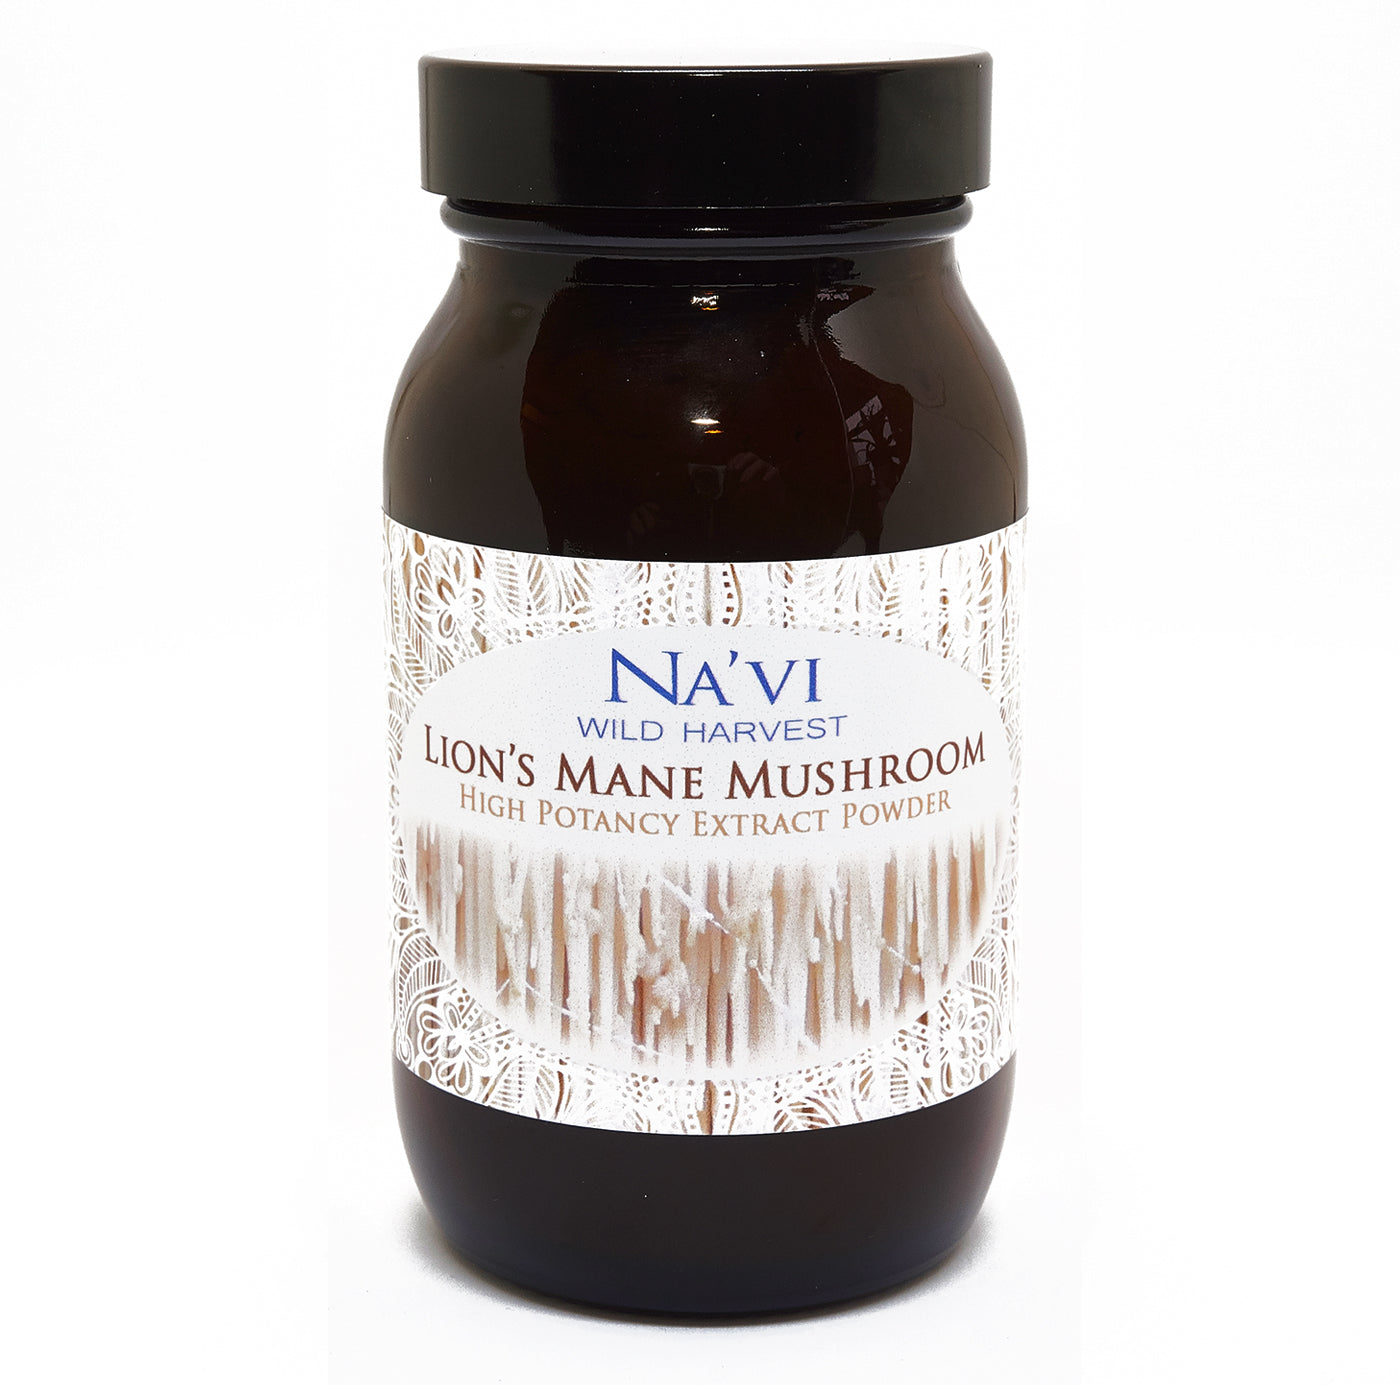 80 gram jar of Lions Mane Mushroom Extract tonic herb powder